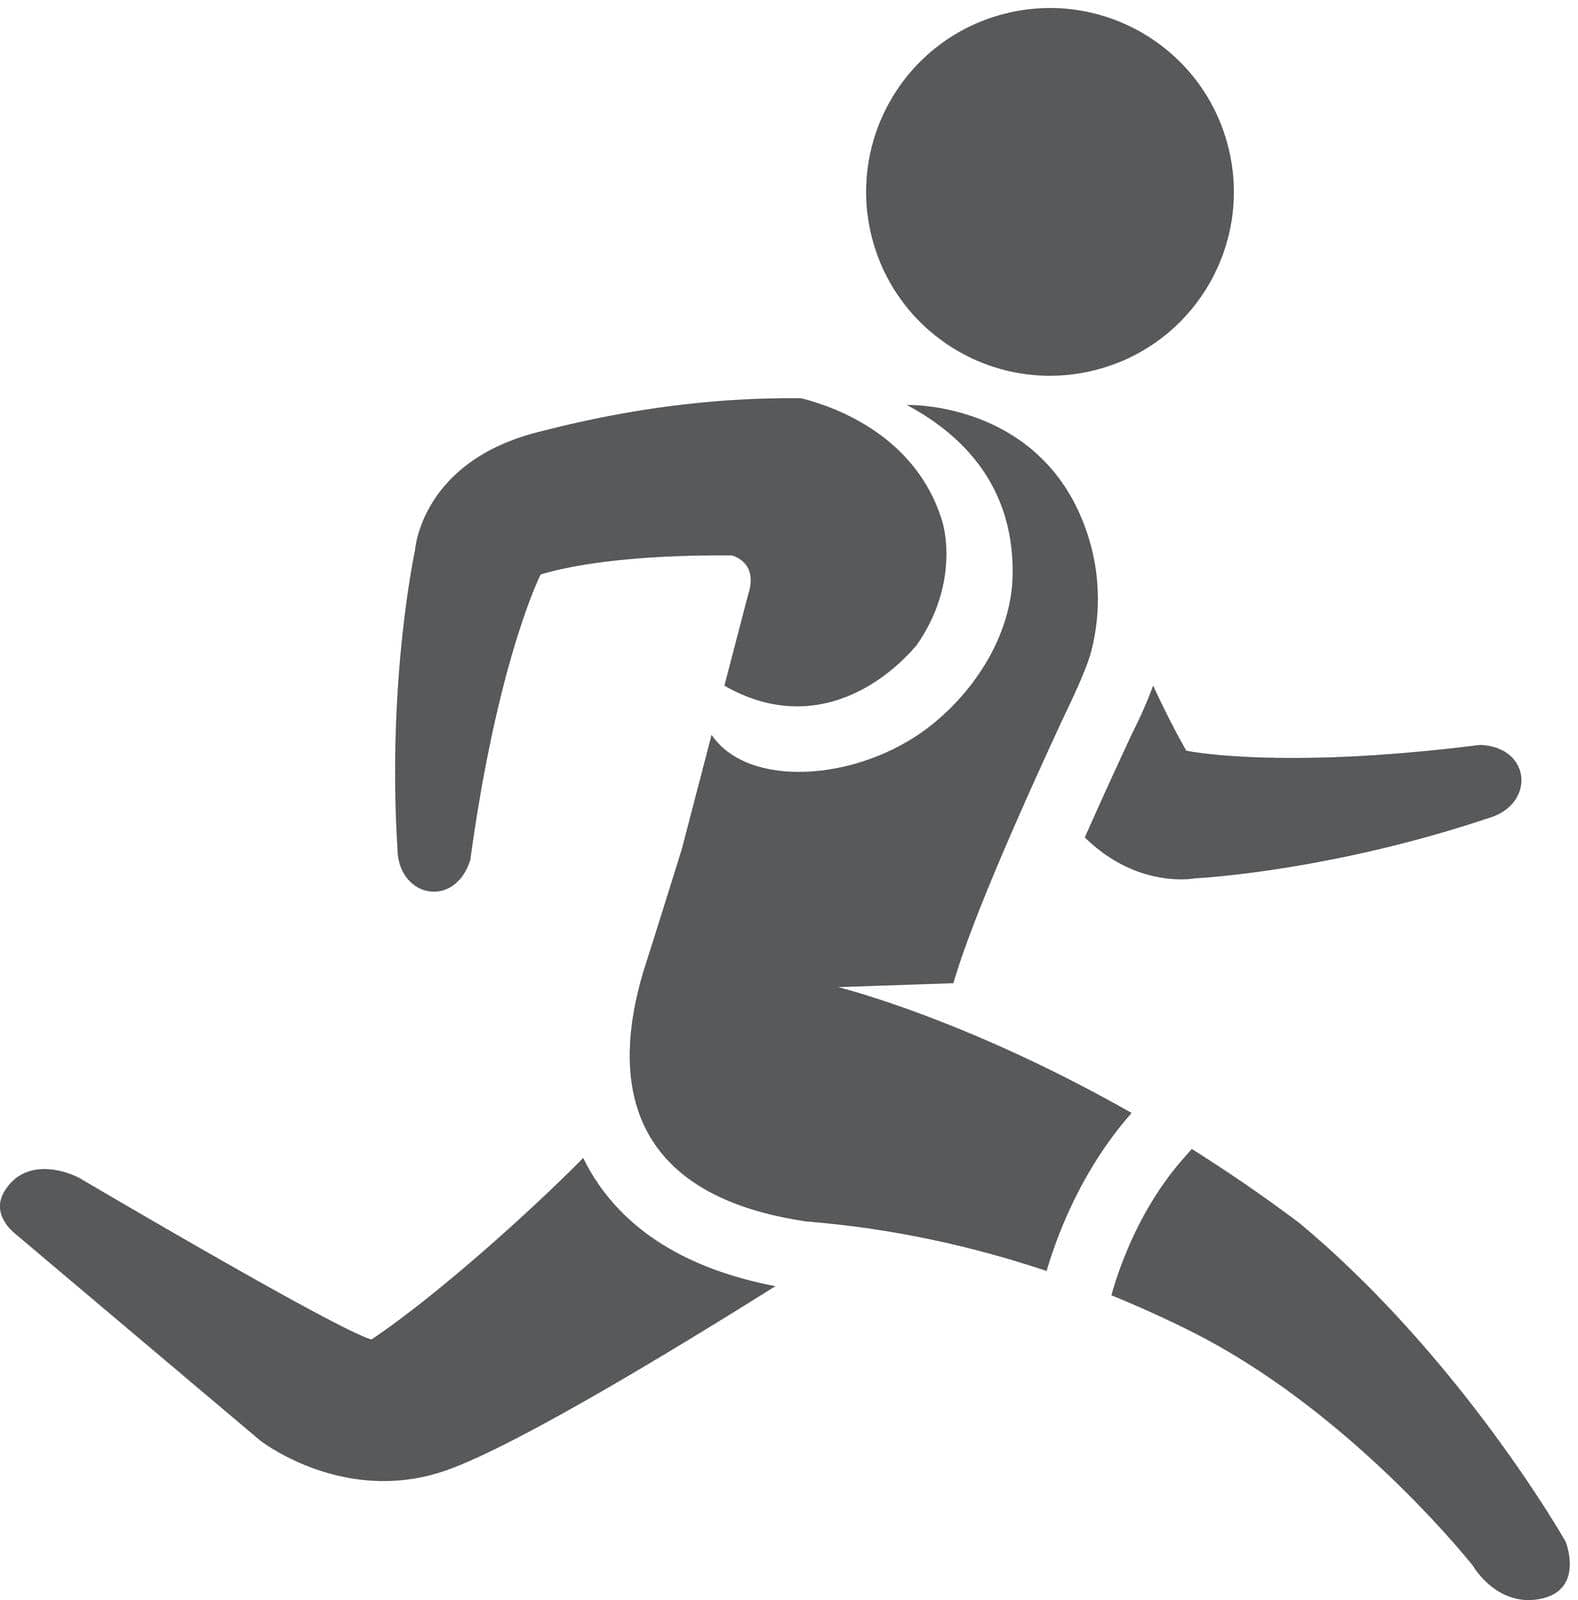 Running athlete icon in single grey color. Marathon triathlon competition olympics olympians sport